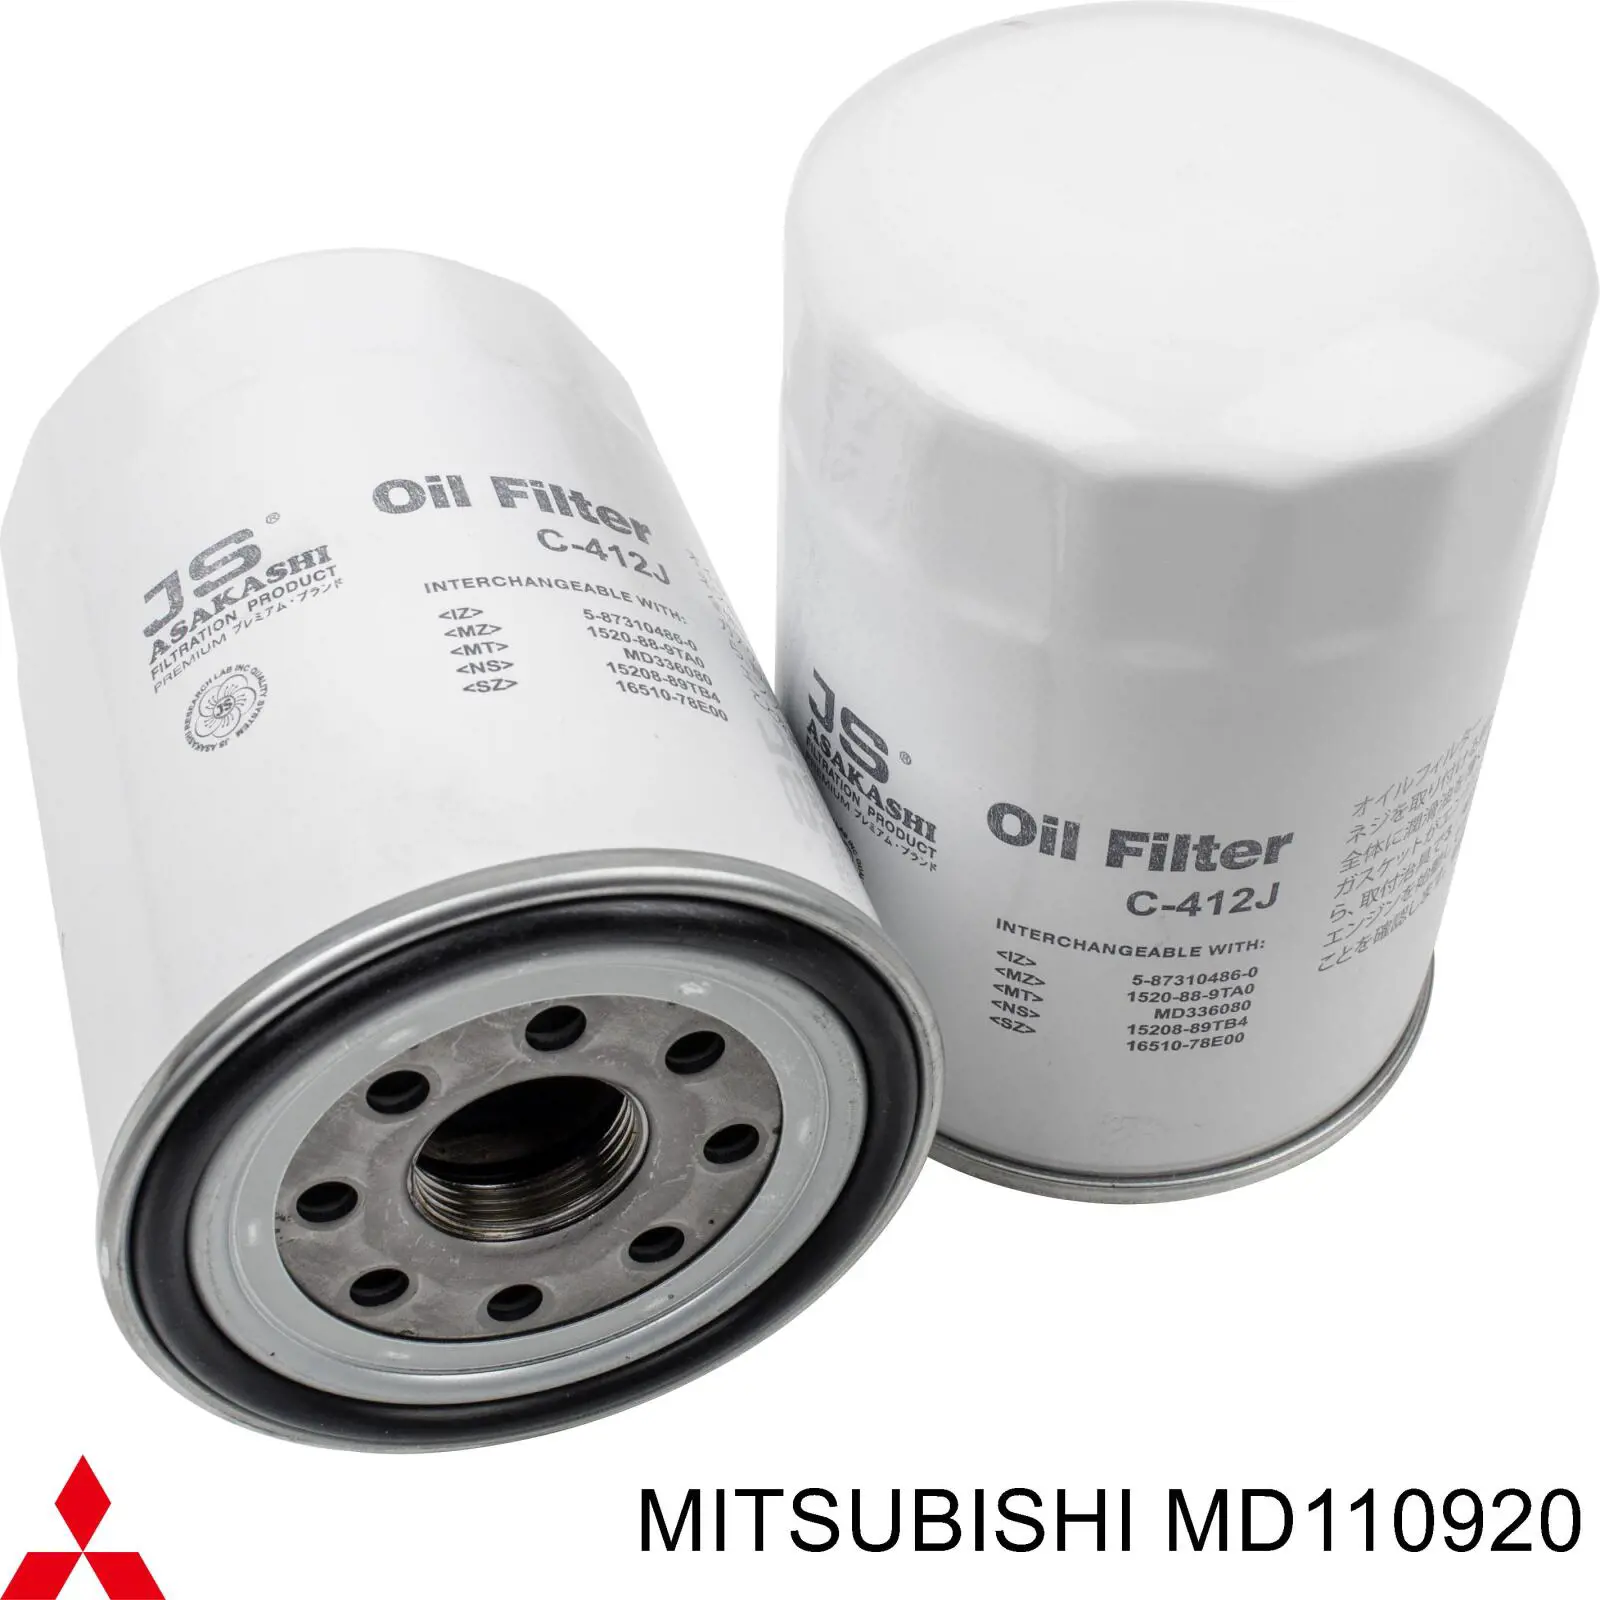 MD110920 Mitsubishi filtro de aceite